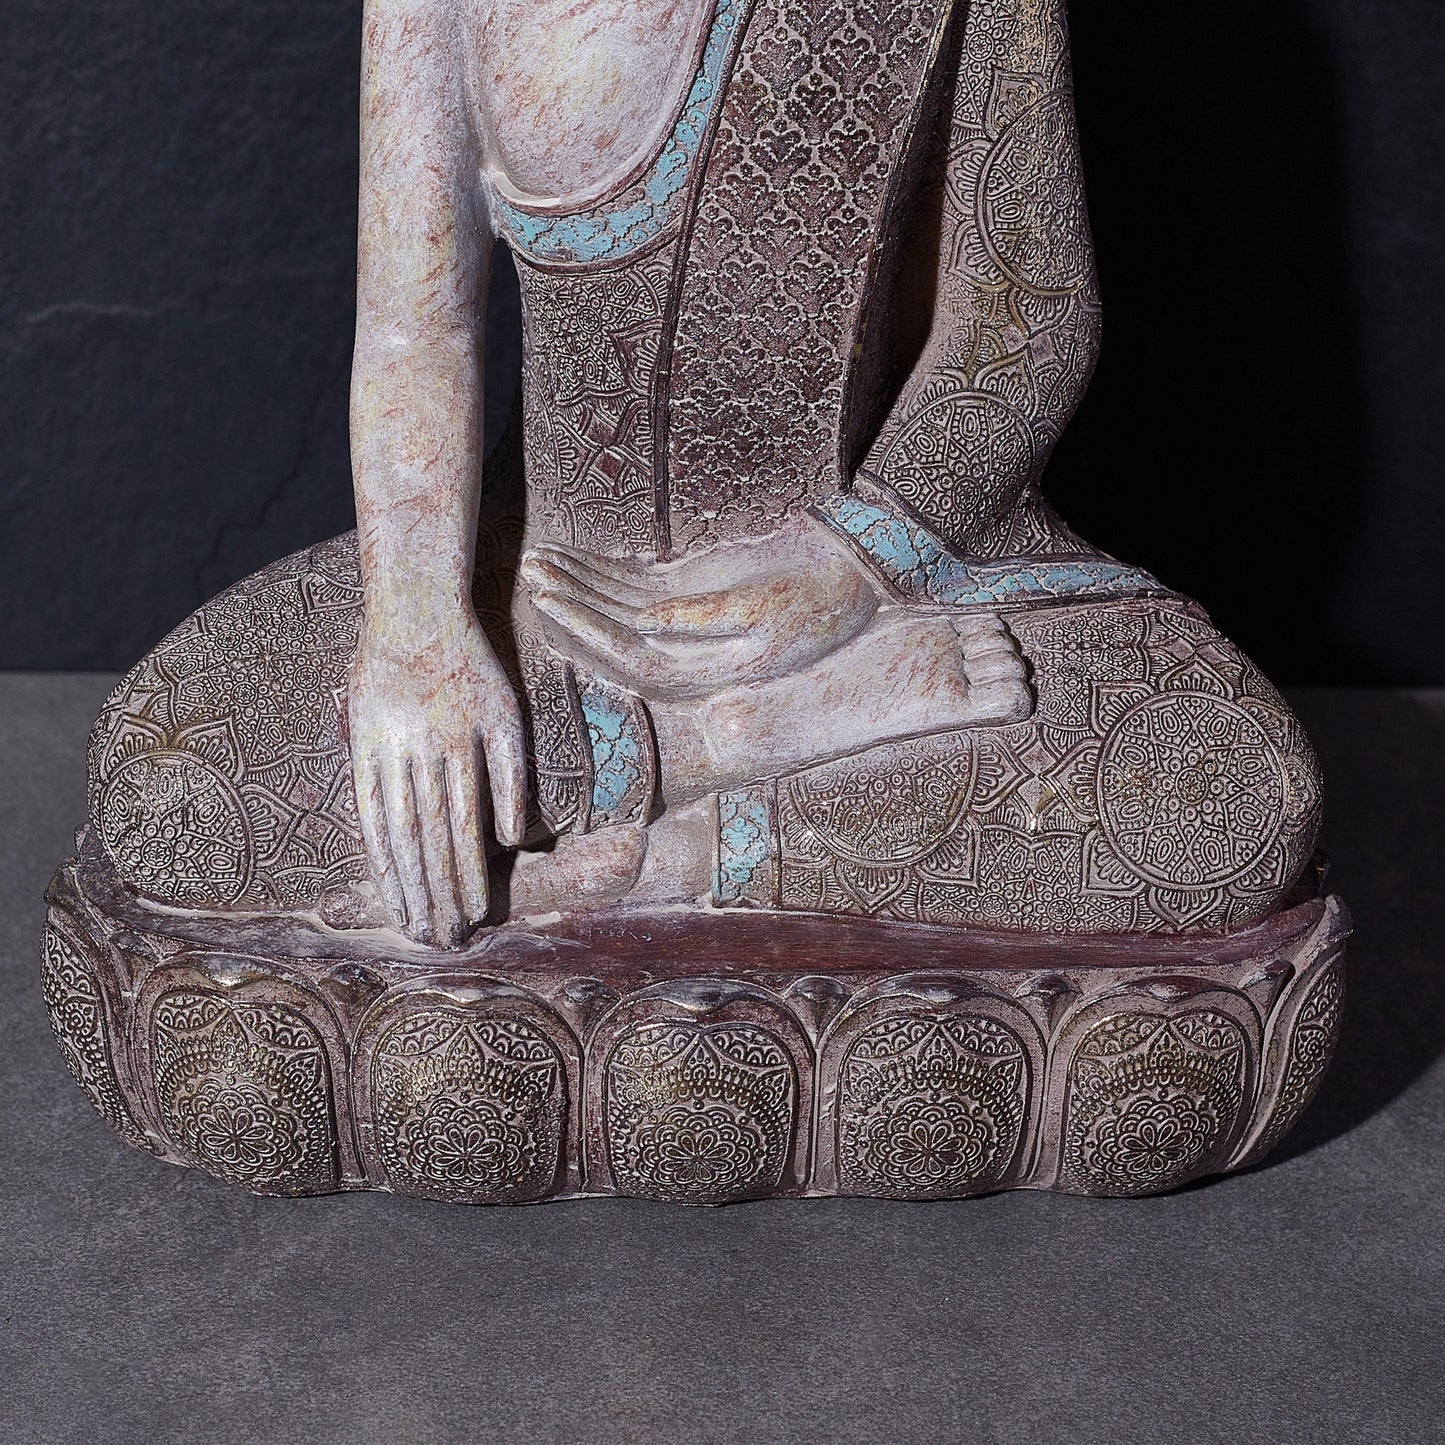 Lotus Buddha Statue